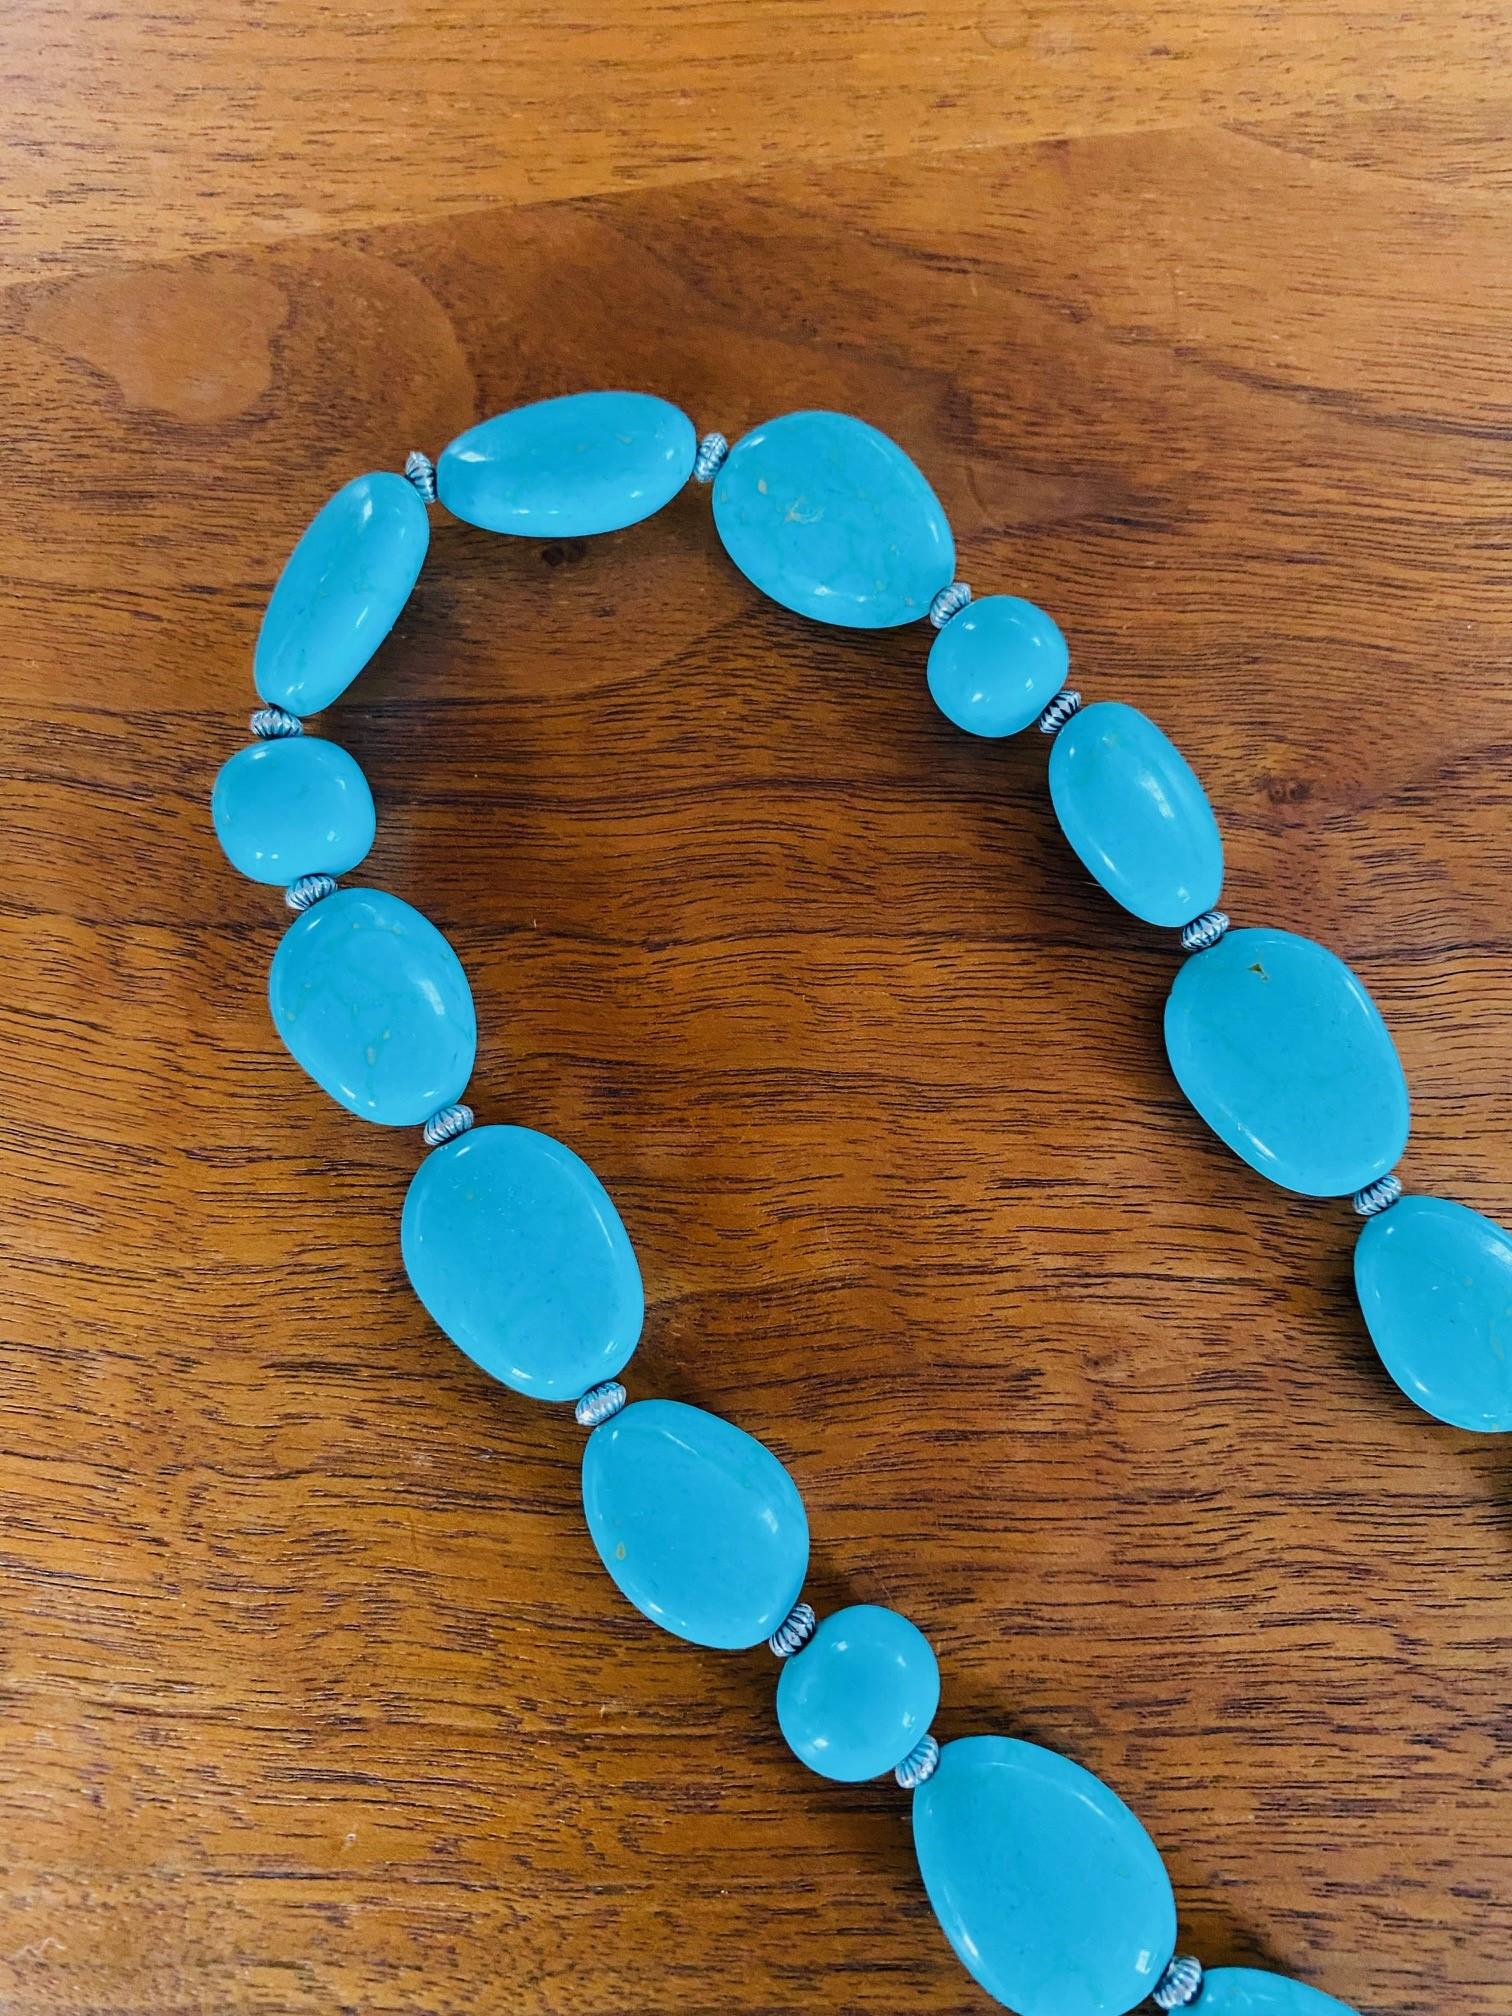 ralph lauren vintage turquoise jewelry